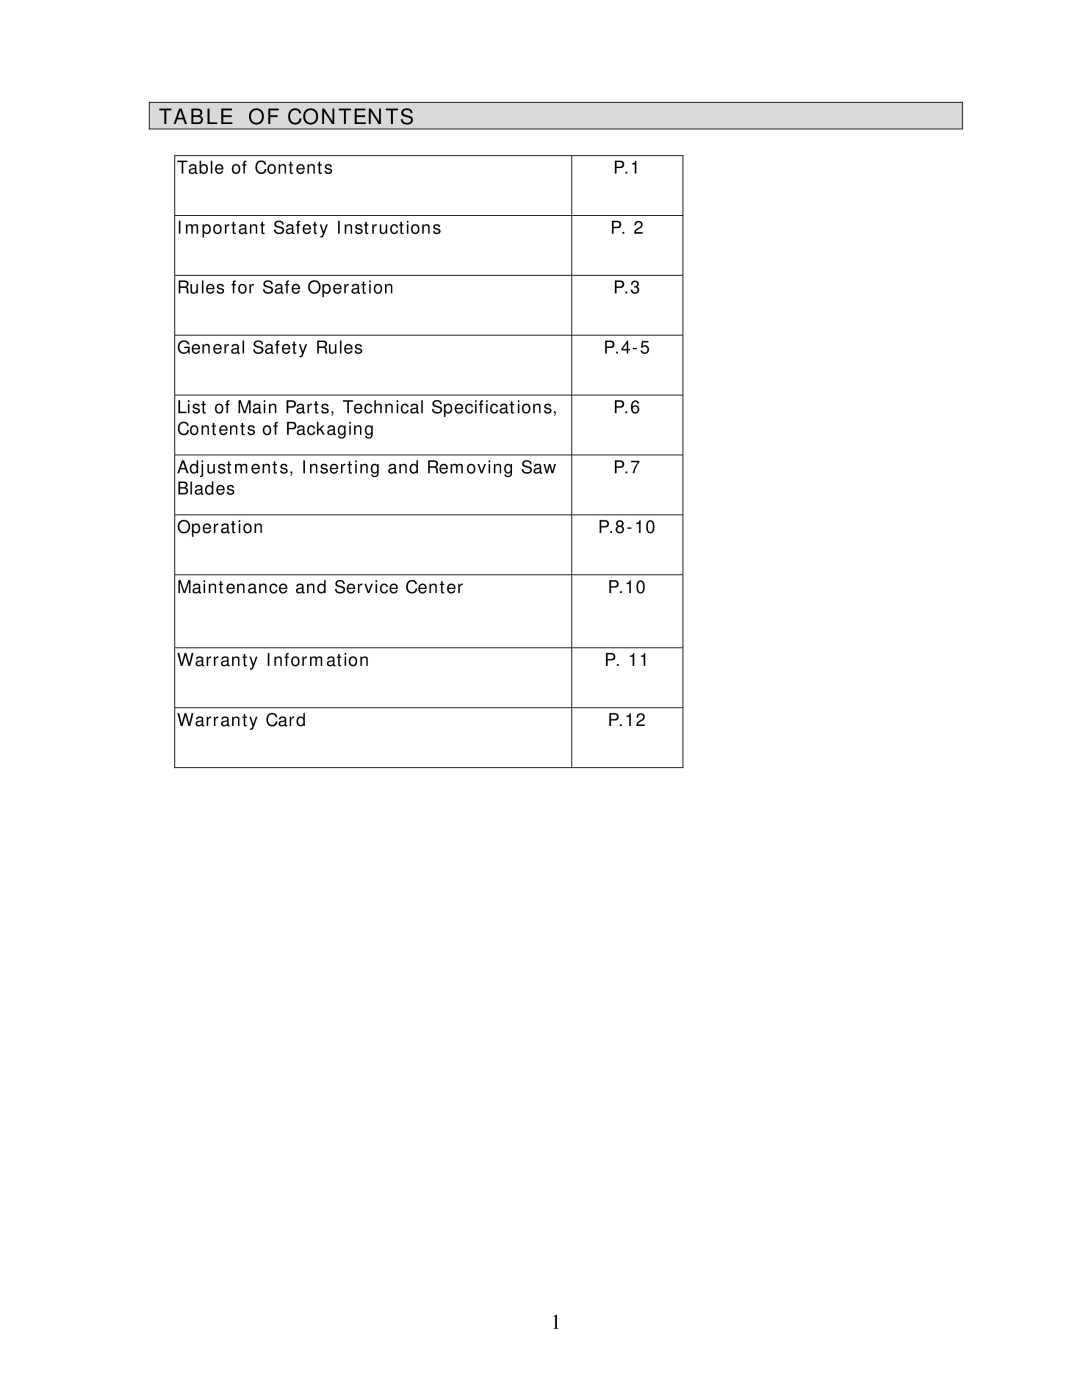 Wachsmuth & Krogmann MIQ-FE-65 manual Table of Contents 